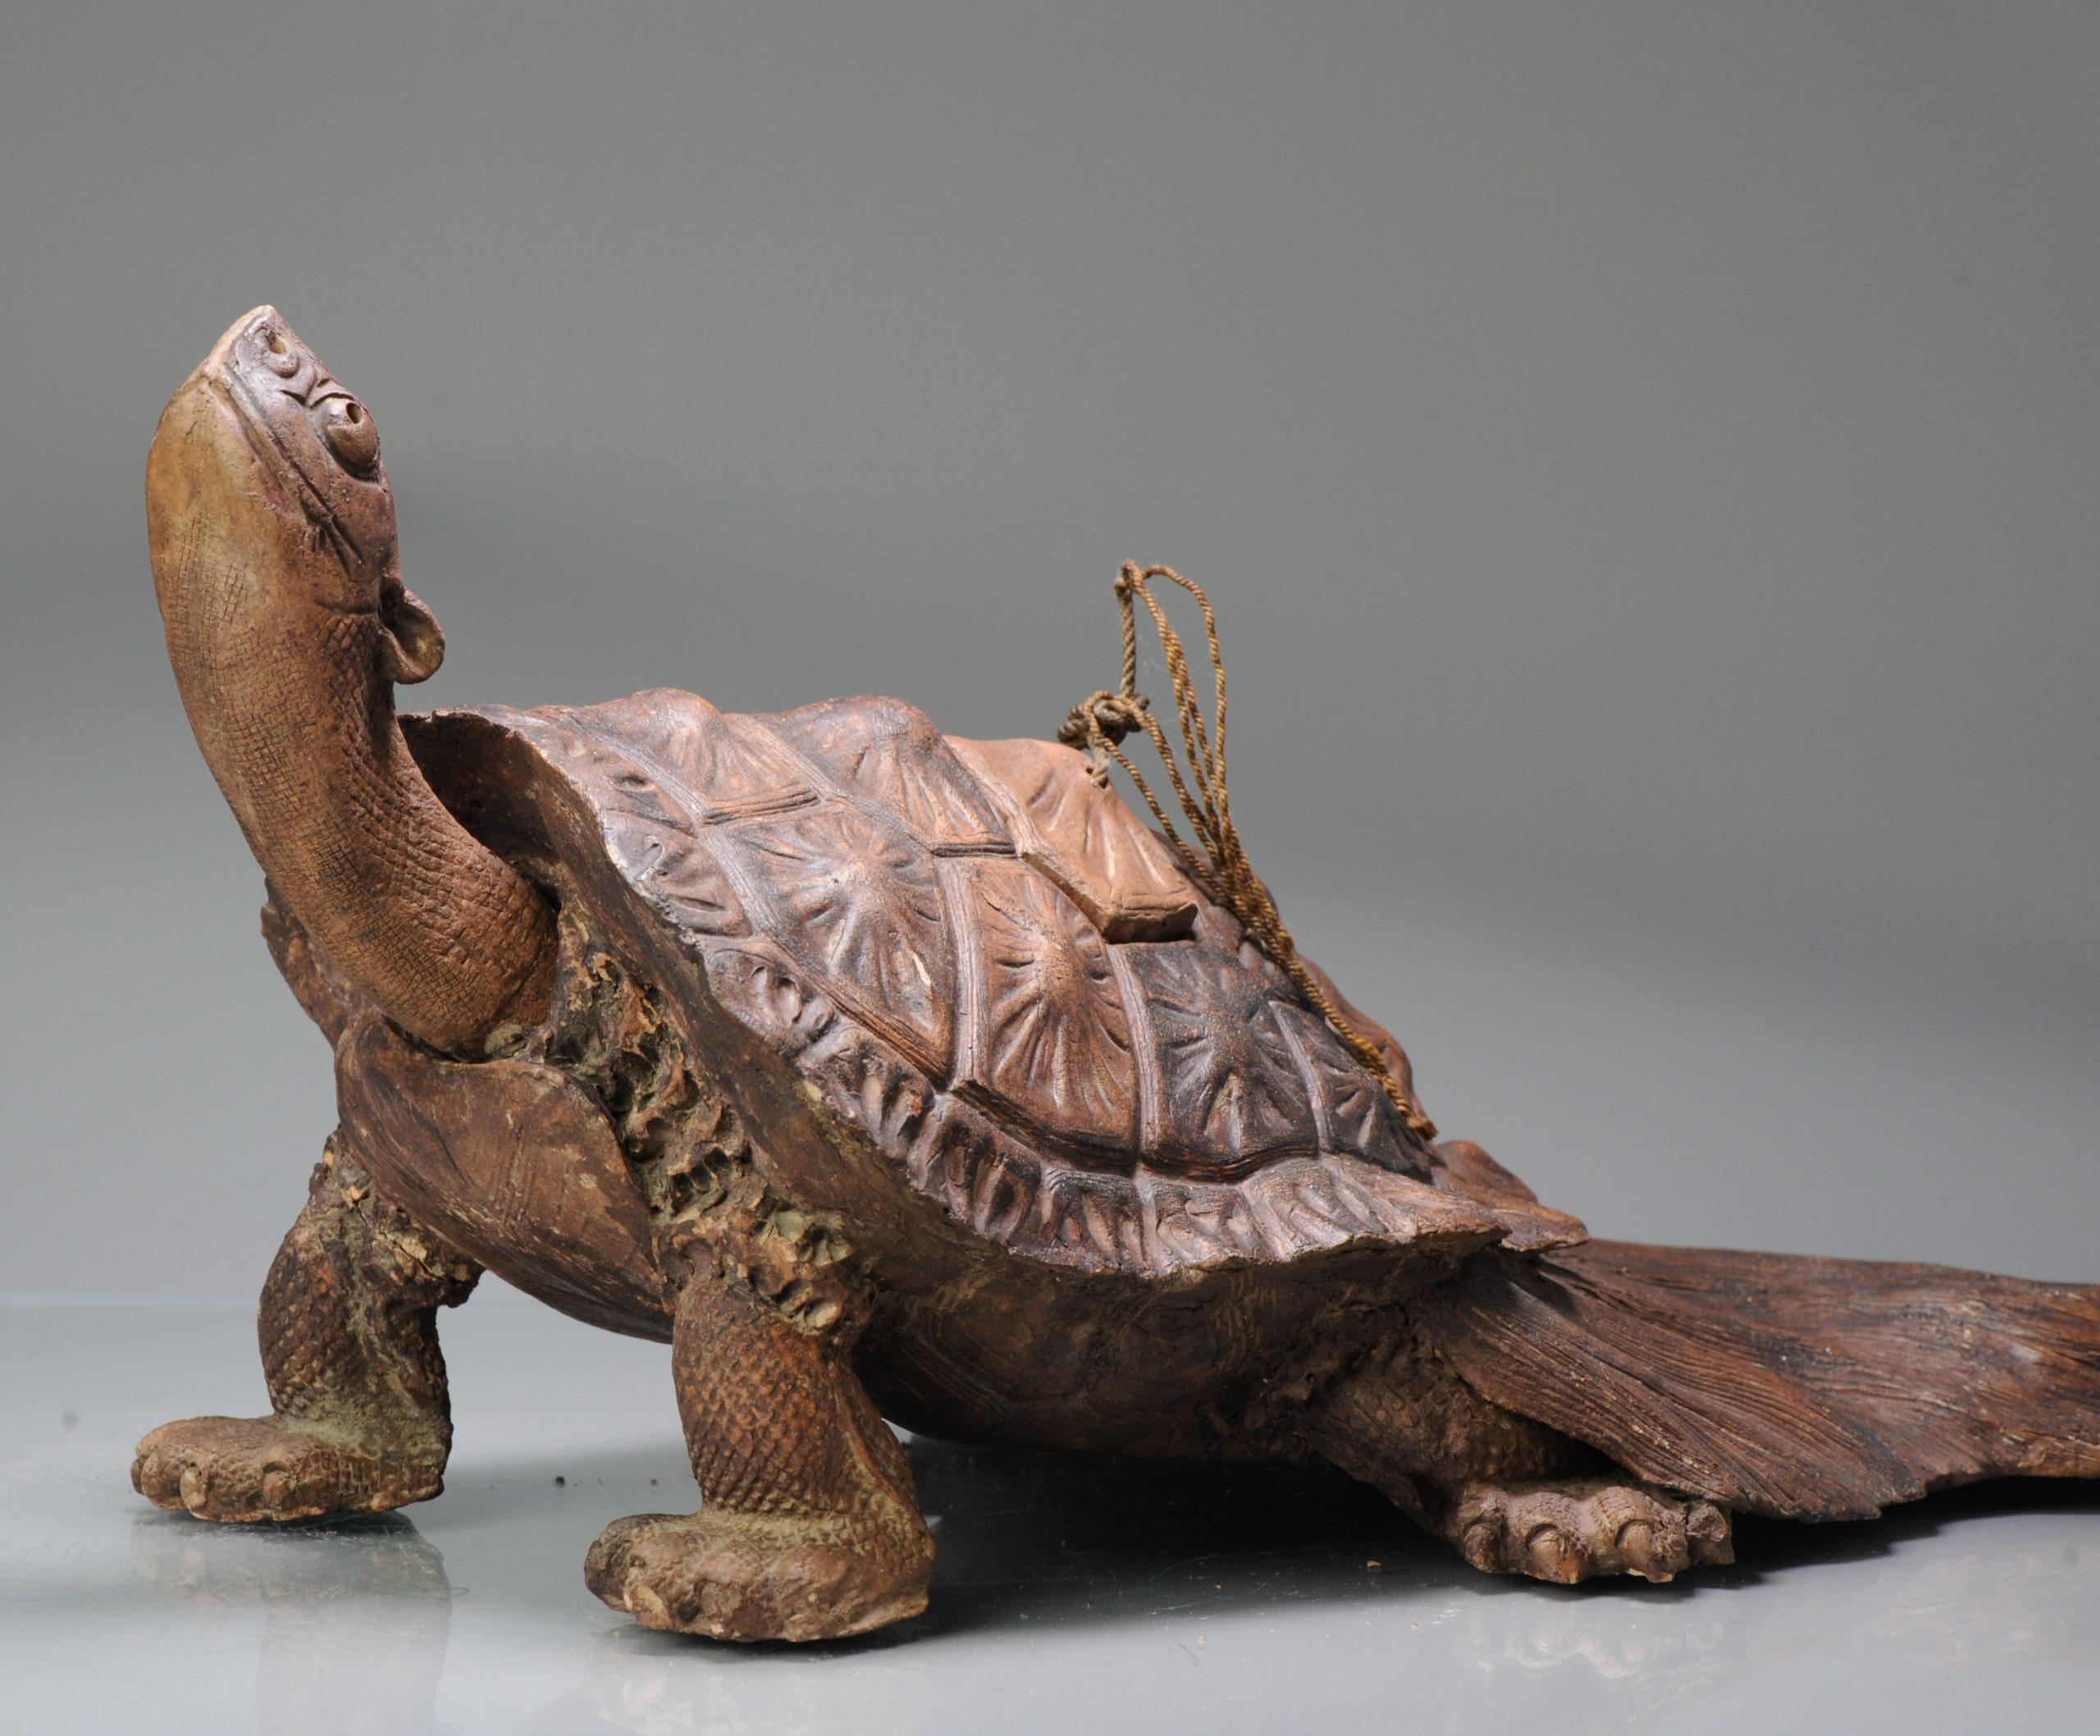 Antique Iwayaki Earthenware Edo Incense Burner of a Turtle 19th Century Japan For Sale 6